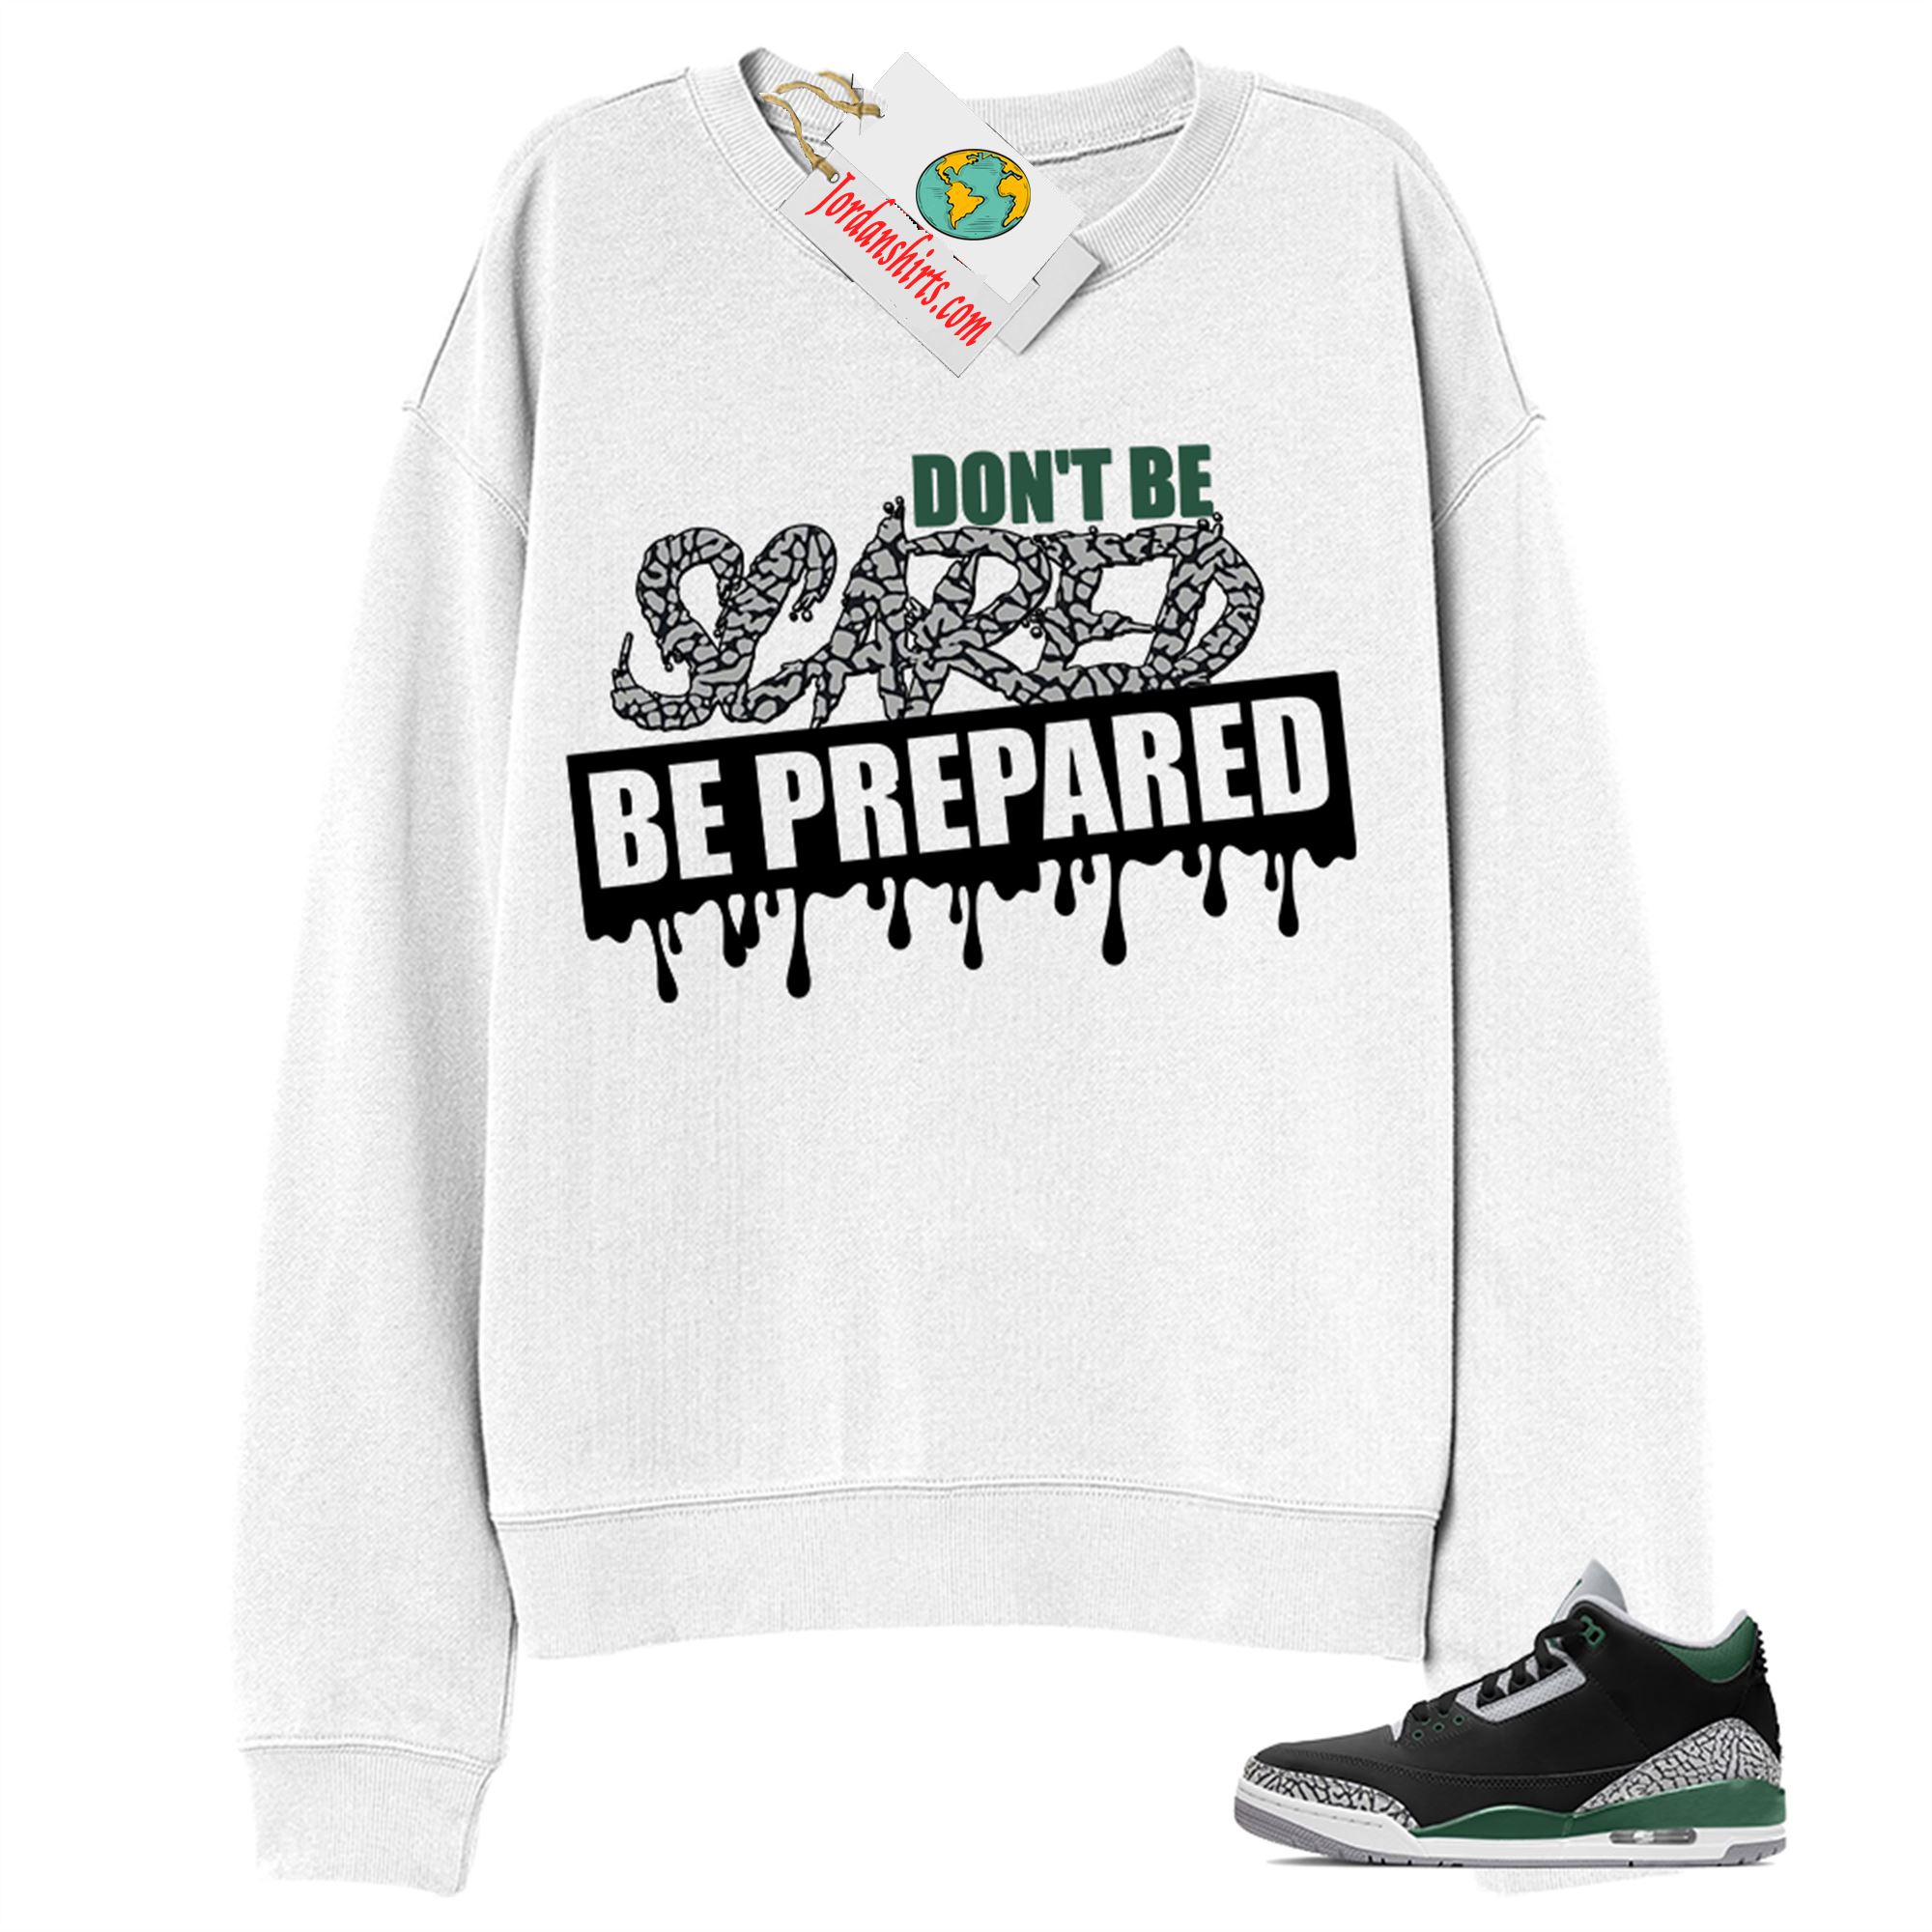 Jordan 3 Sweatshirt, Dont Be Scared Be Prepared White Sweatshirt Air Jordan 3 Pine Green 3s Size Up To 5xl